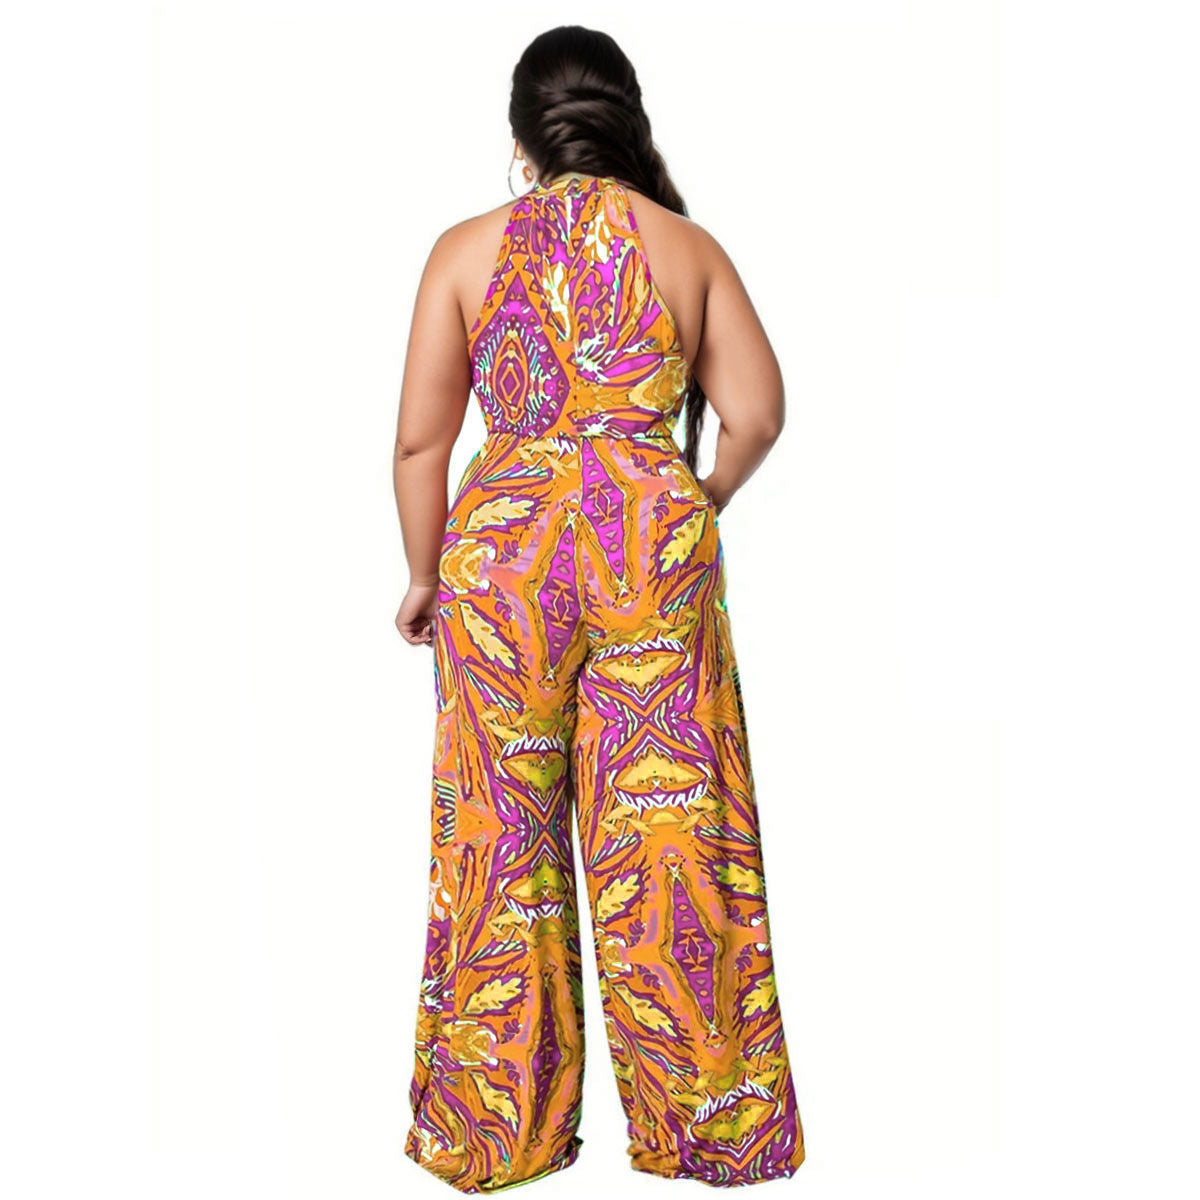 1XL Orange Paisley Jumpsuit|1XL - Premium Wholesale Boutique Clothing from Pinktown - Just $39! Shop now at chiquestyles